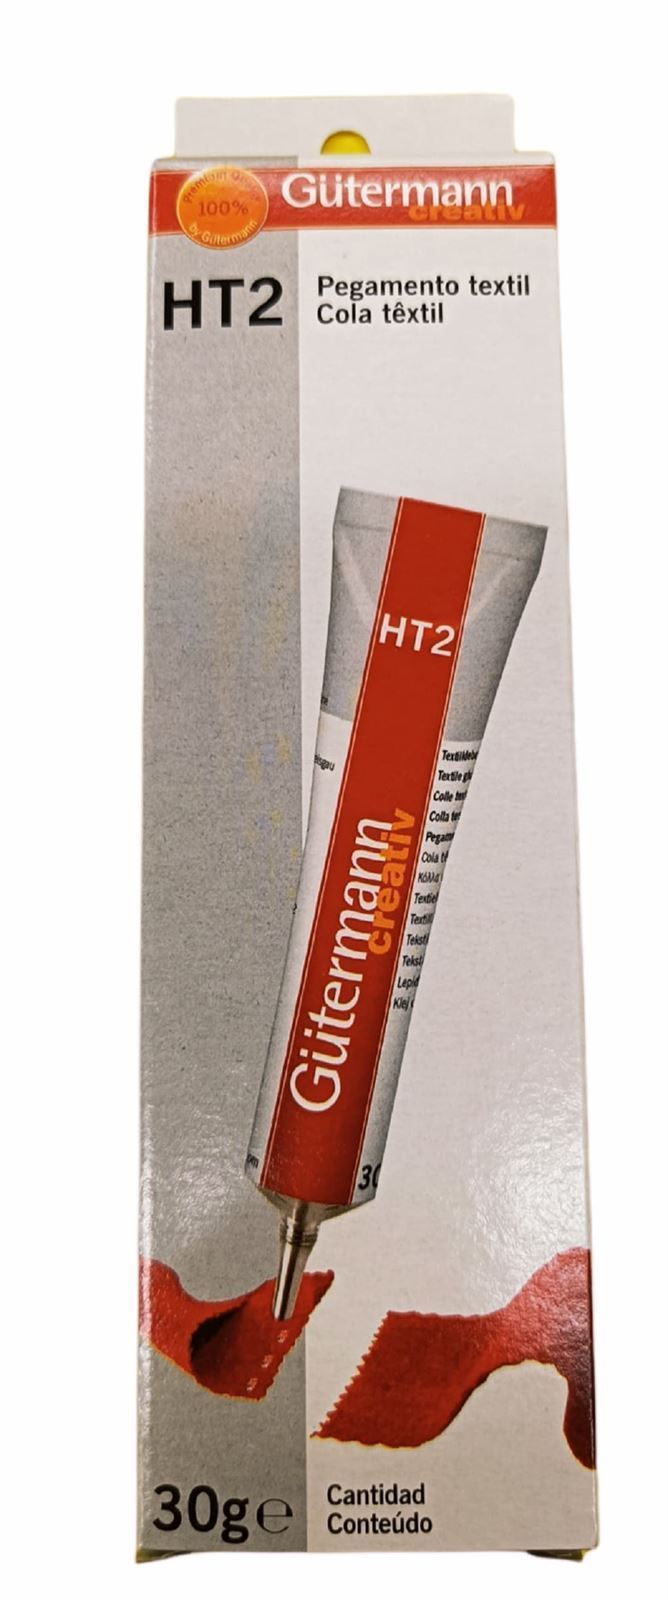 Pegamento textil HT2 30 gr Gutermann - Imagen 1